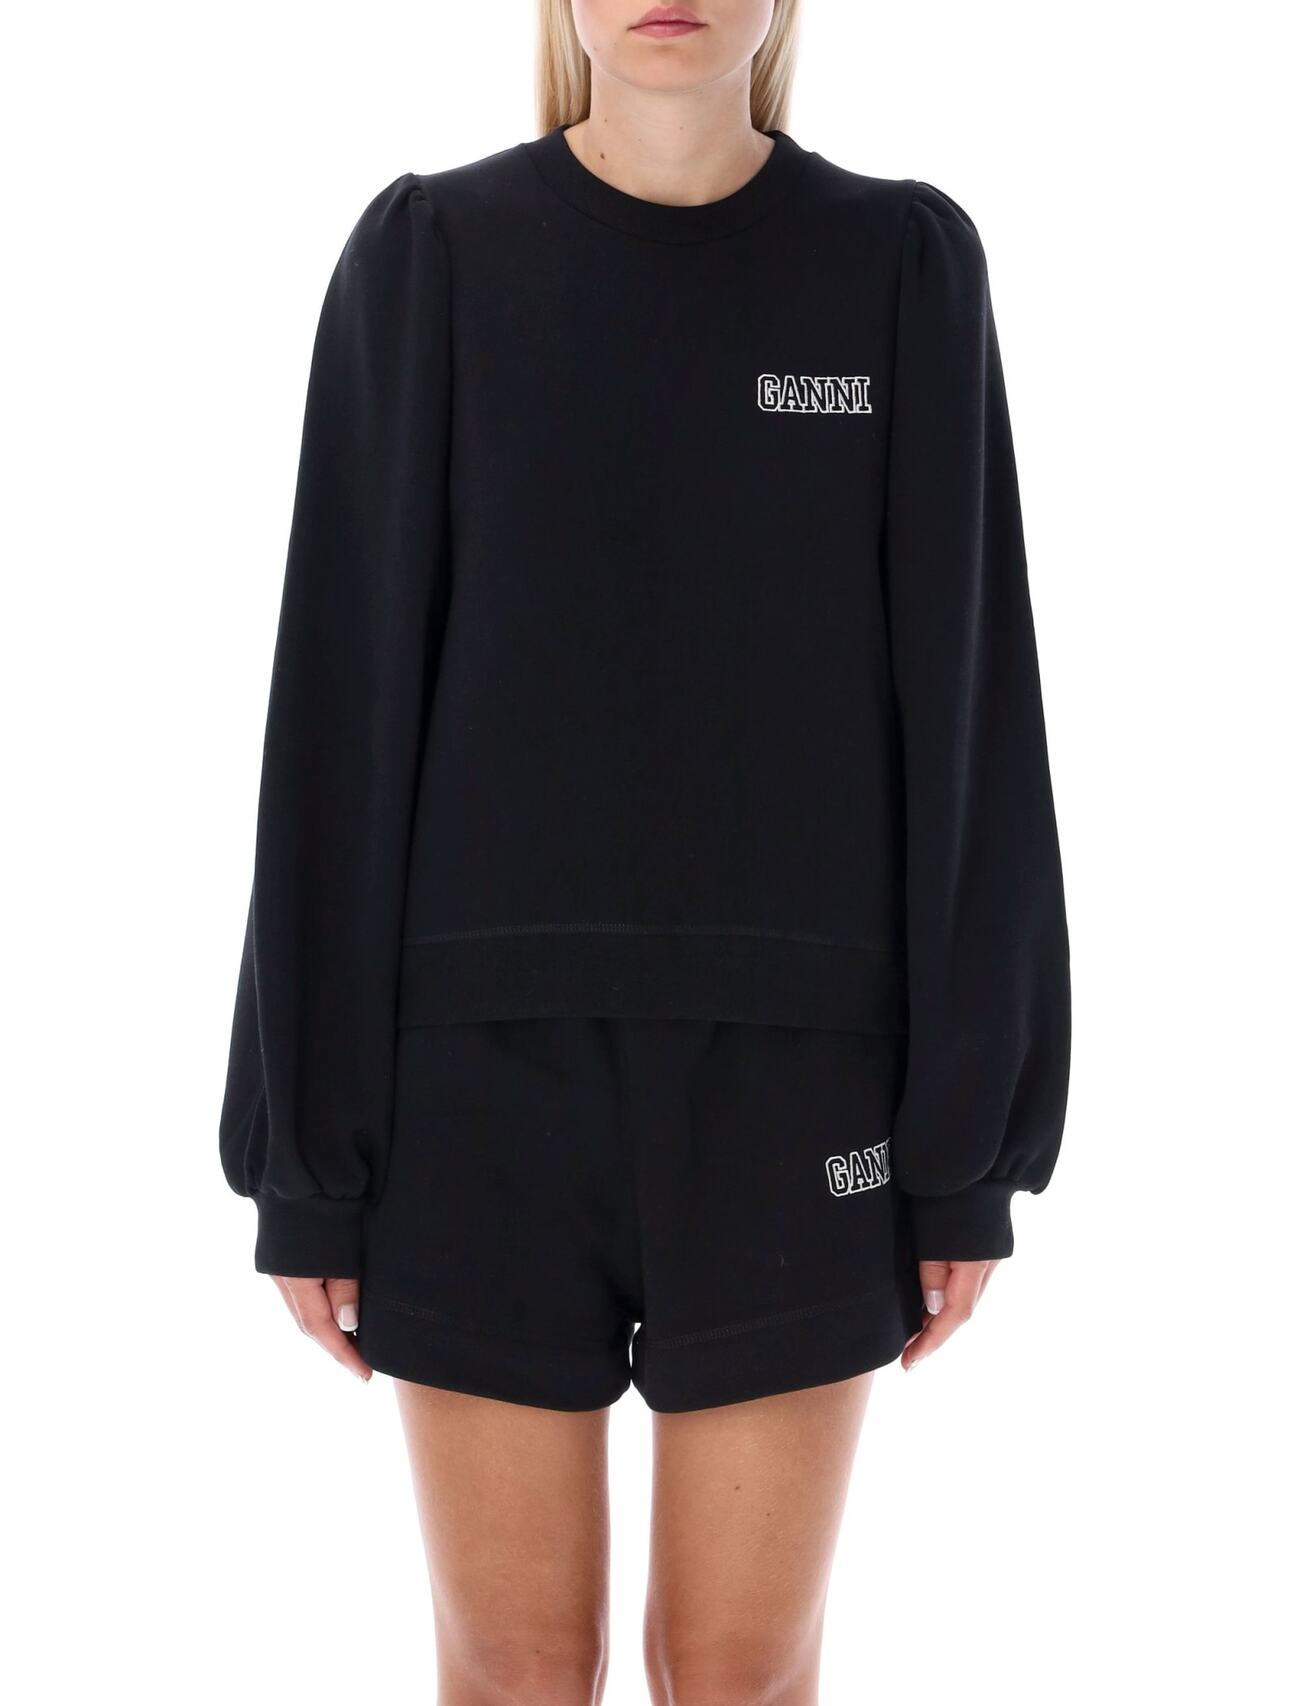 Ganni Isoli Sweatshirt in black